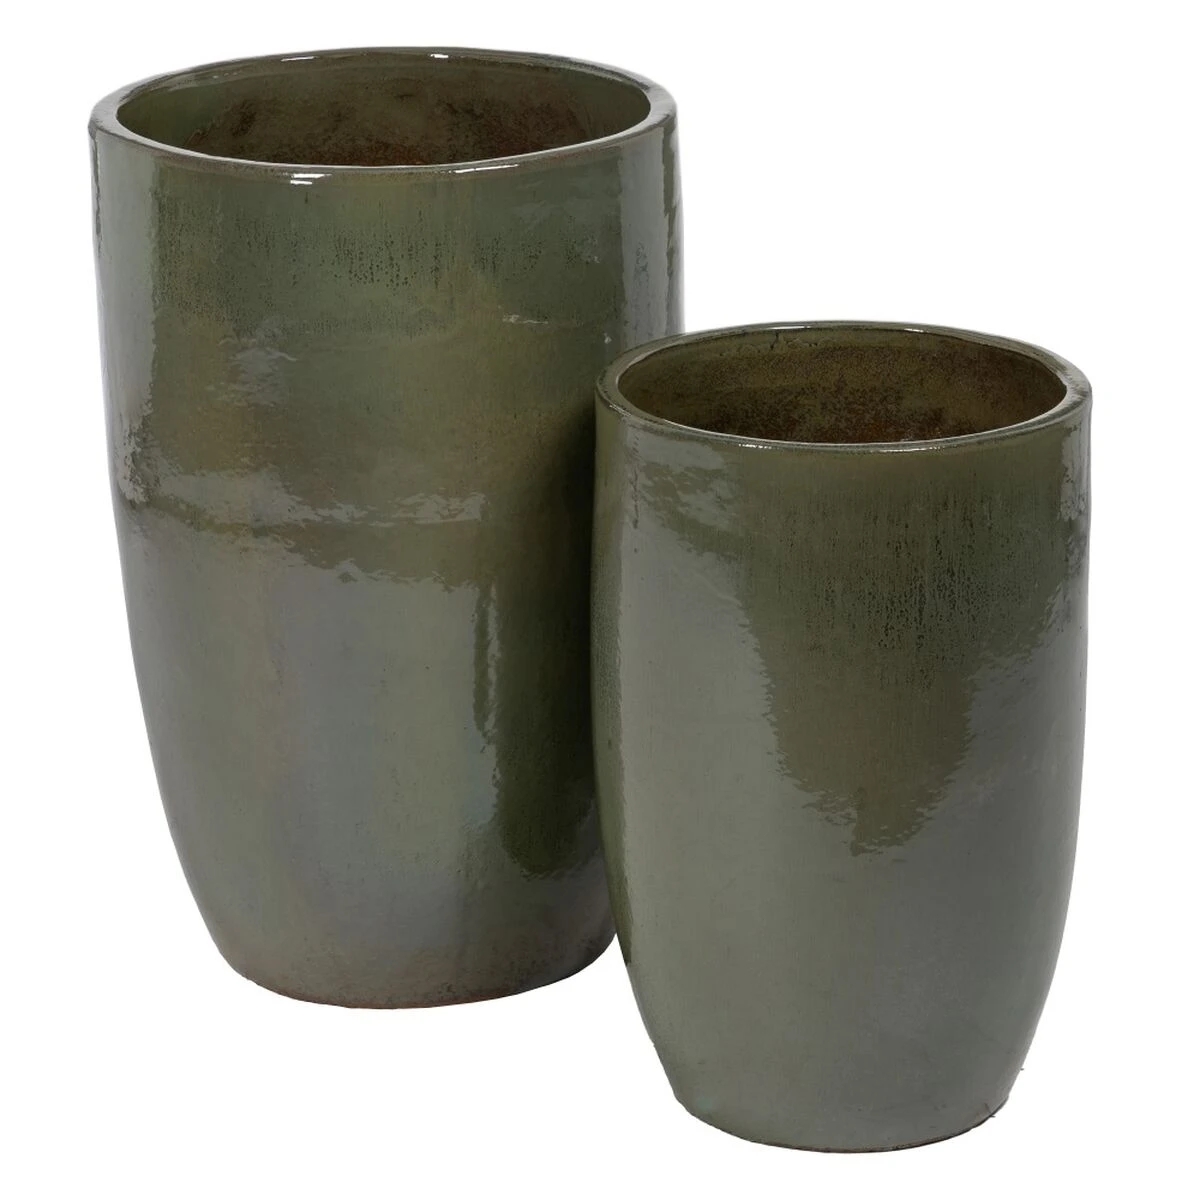 Two green ceramic pots